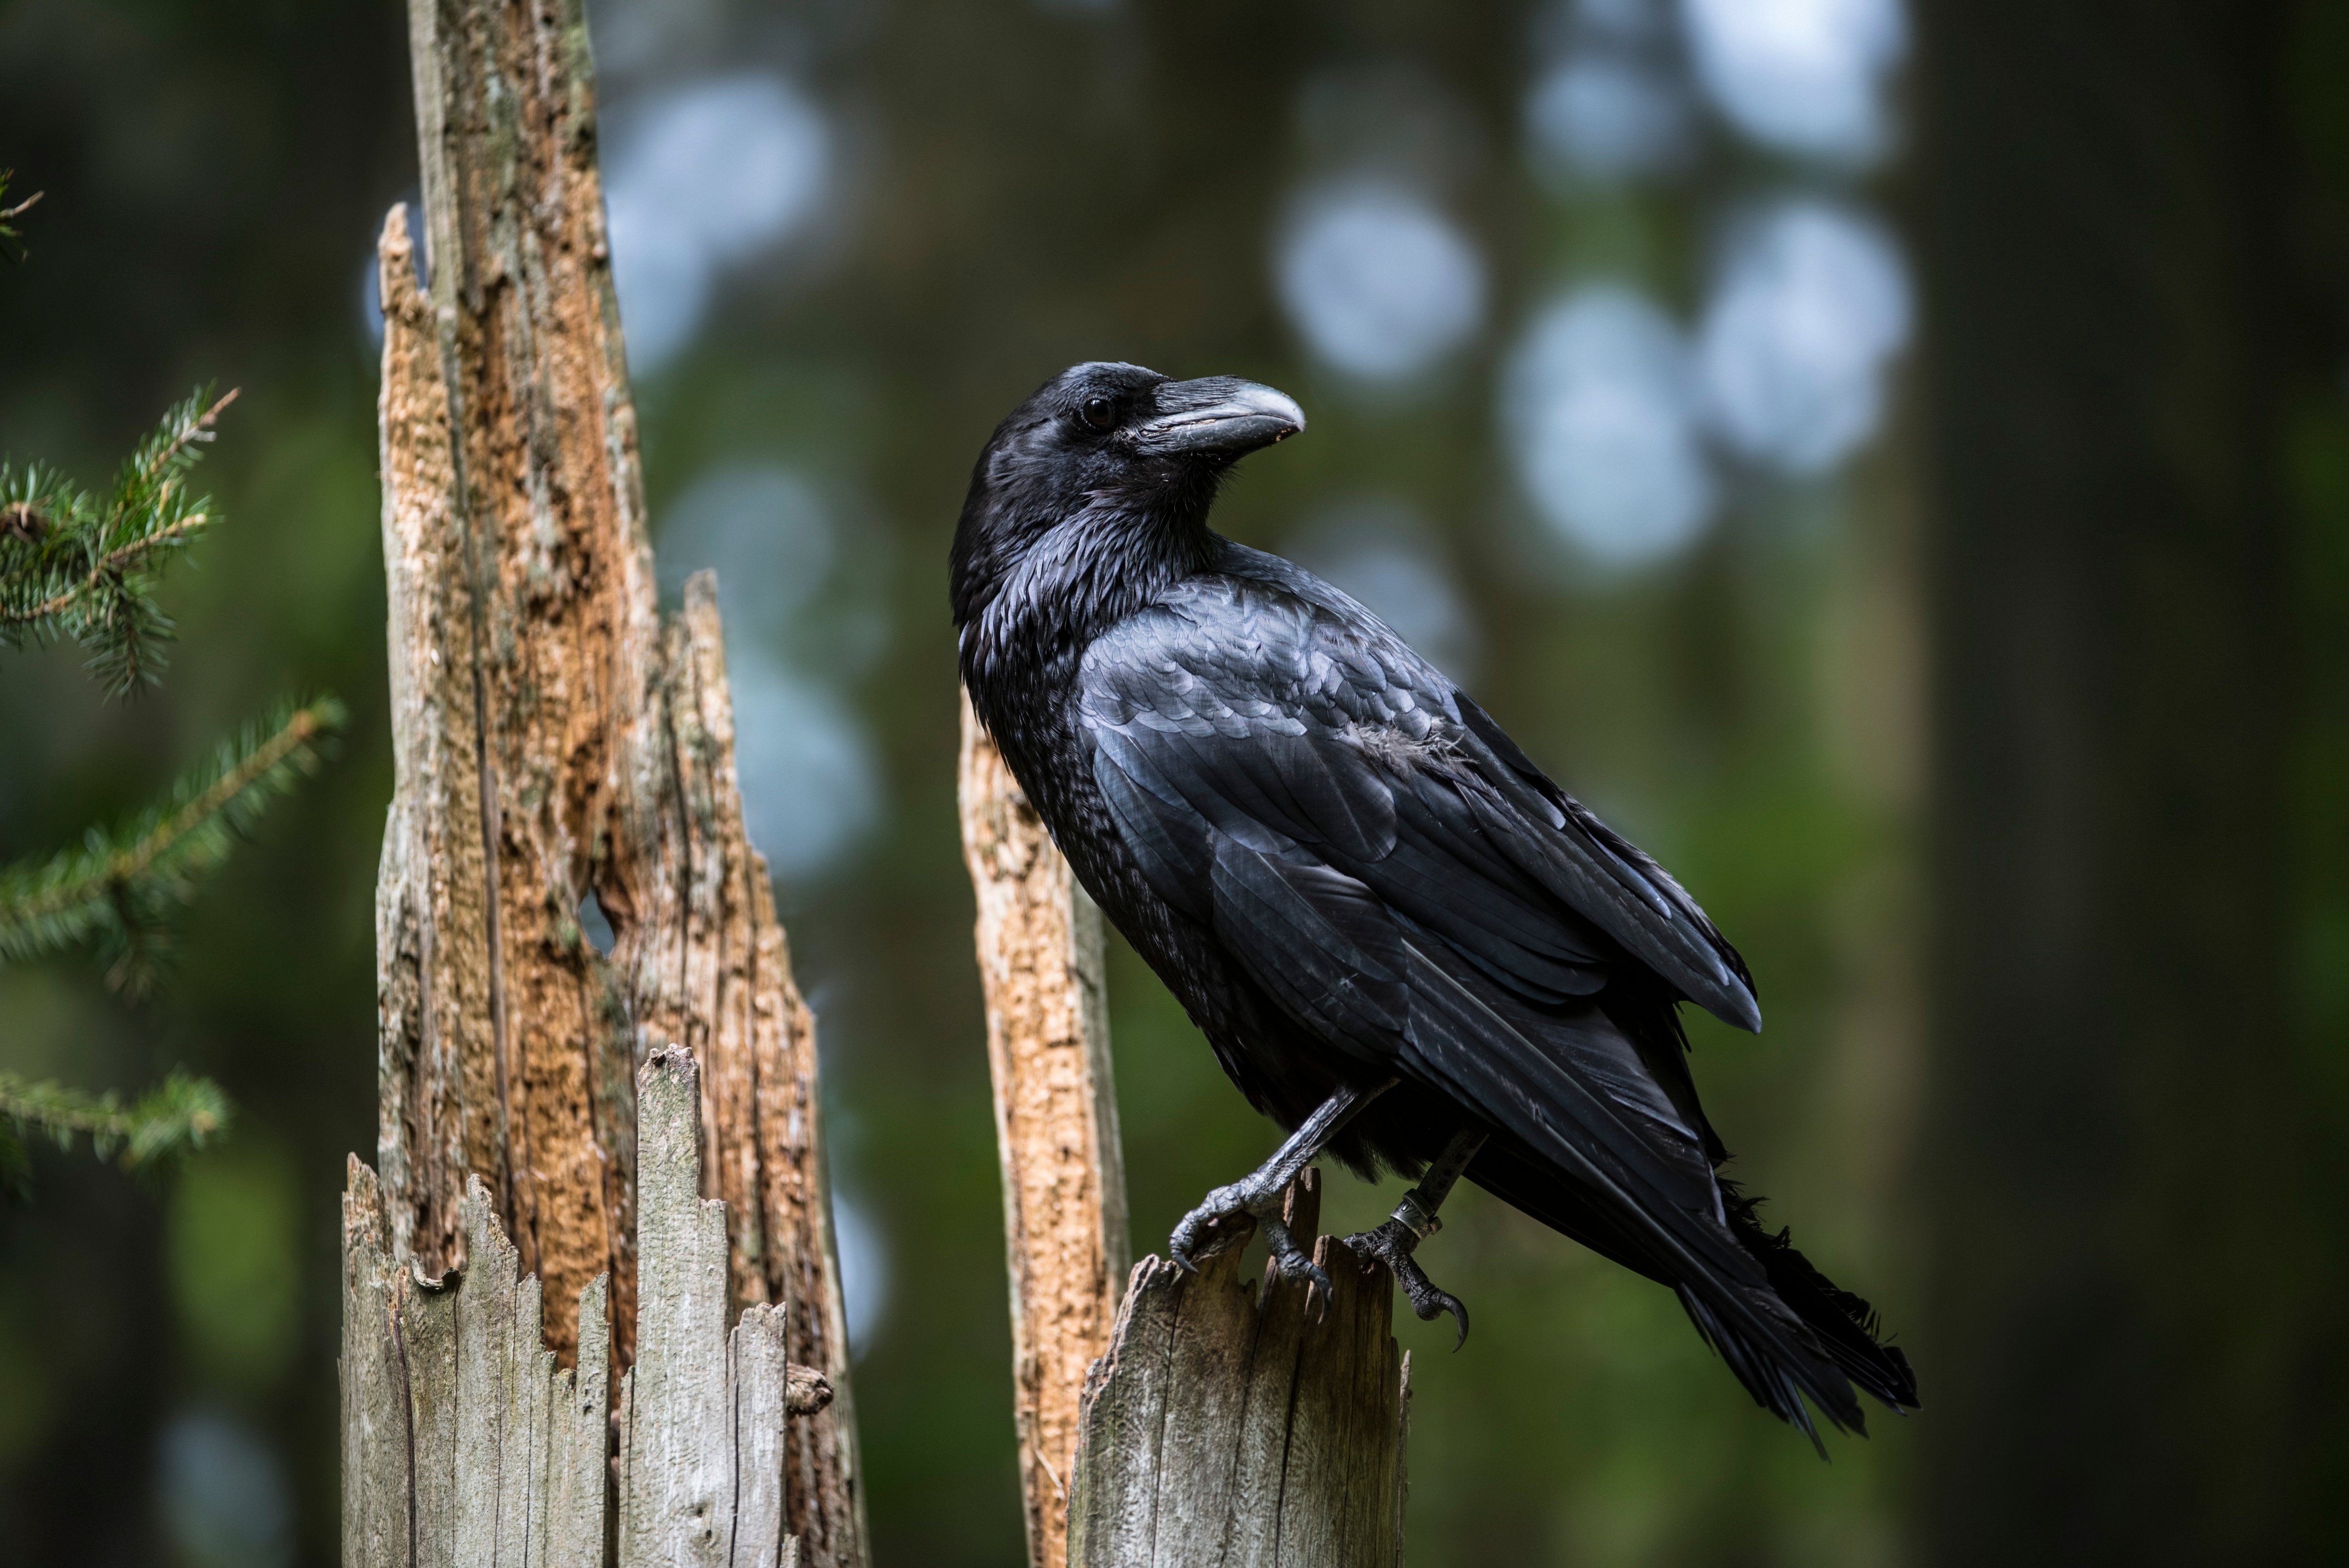 Making plans: The common raven has uncommon skills